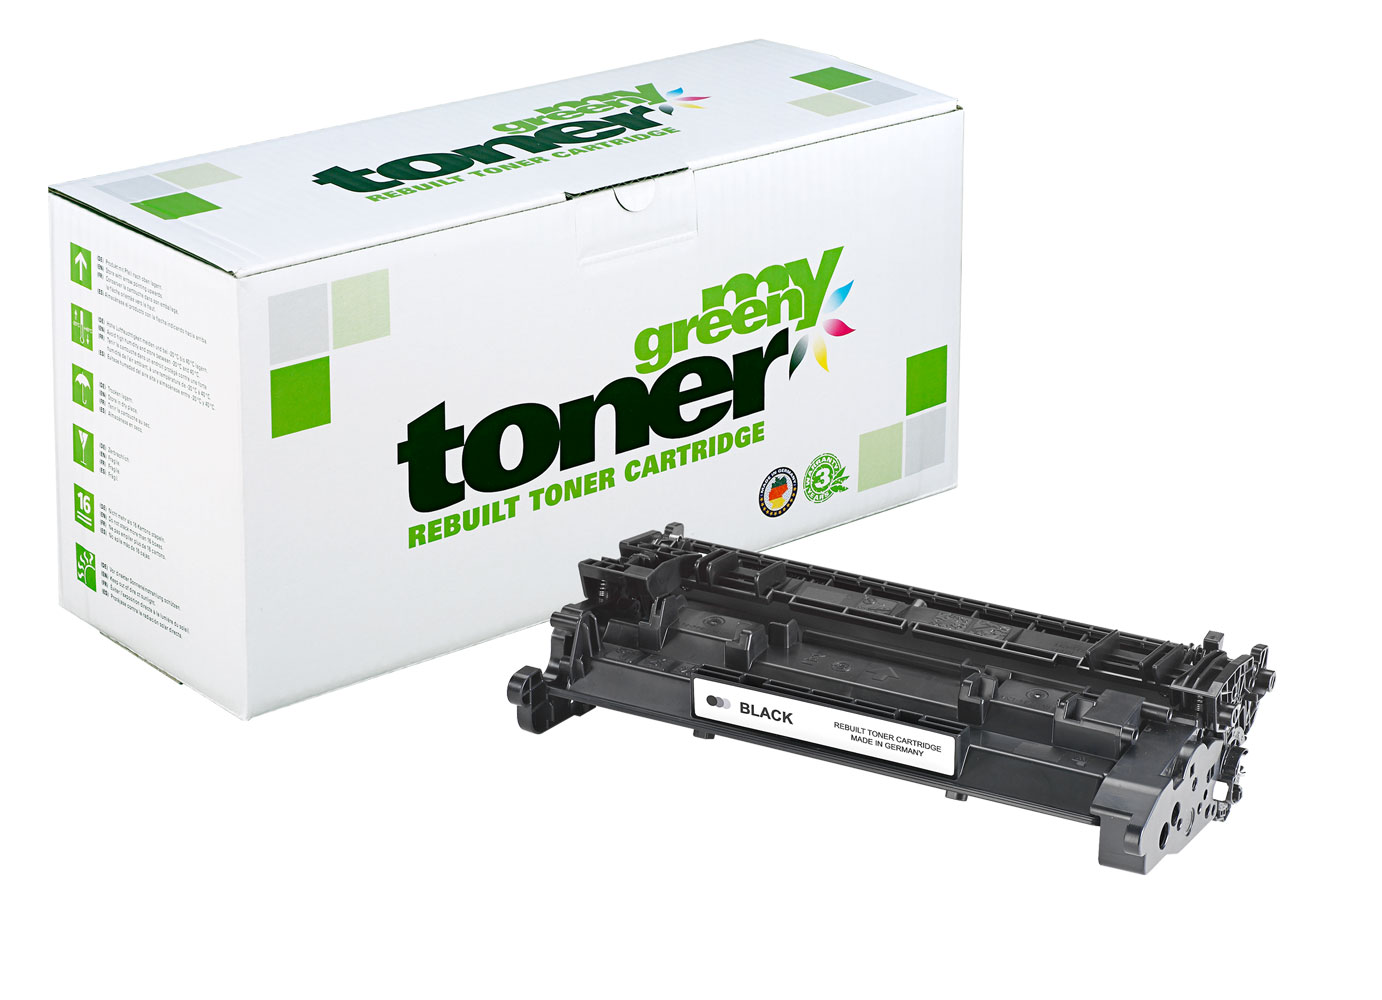 Rebuilt toner cartridge for Canon I-Sensys LBP-223, MF-445 a. o.